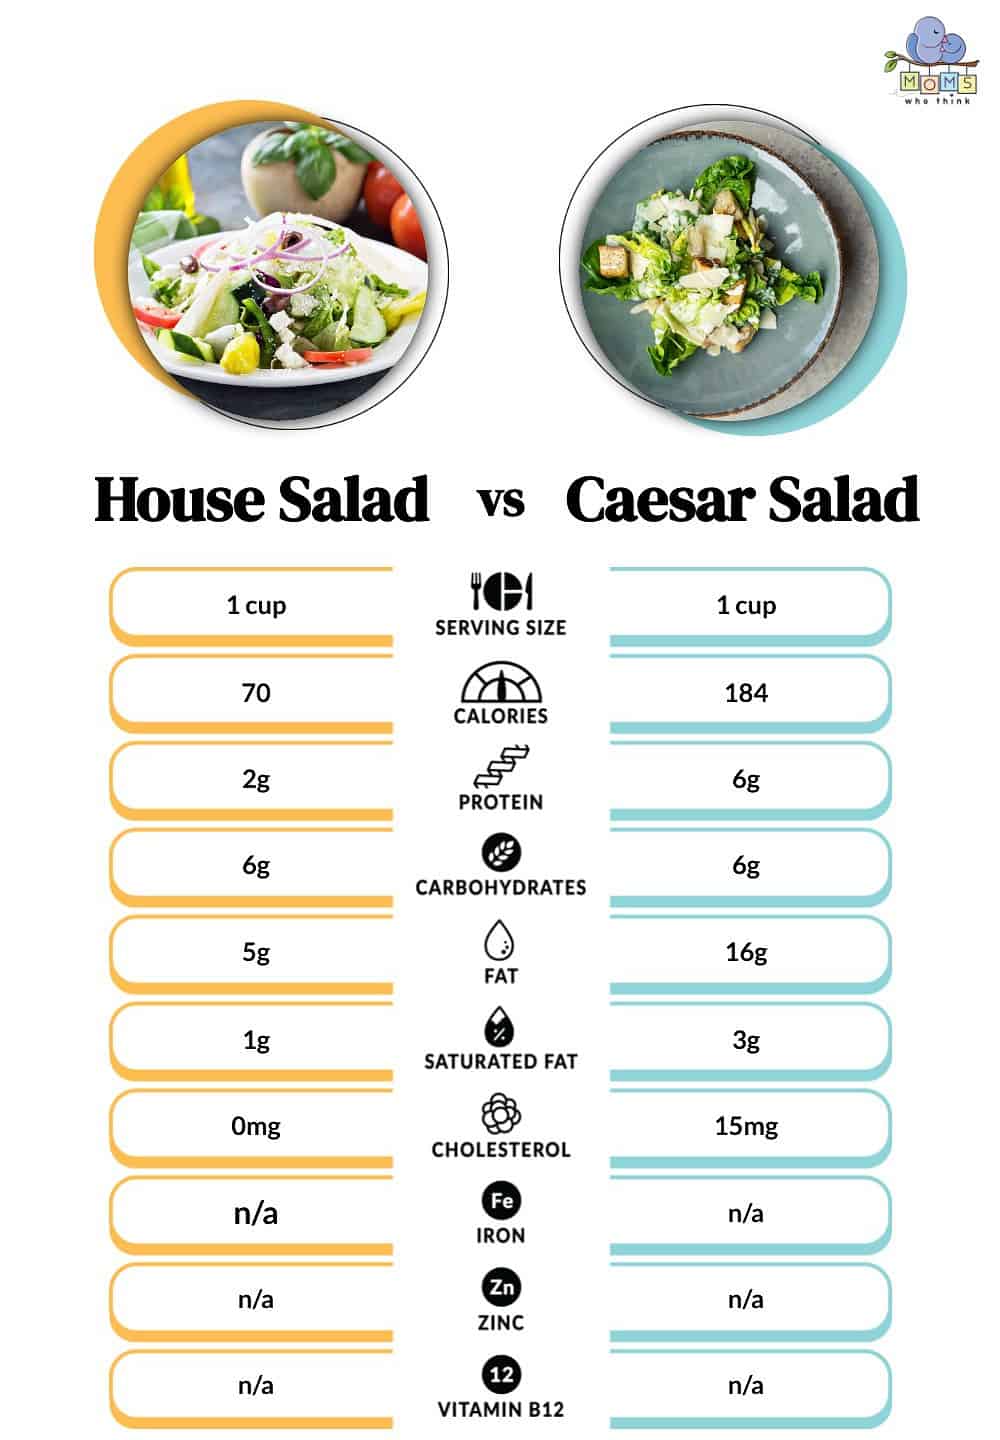 House Salad vs Caesar Salad Nutritional Facts